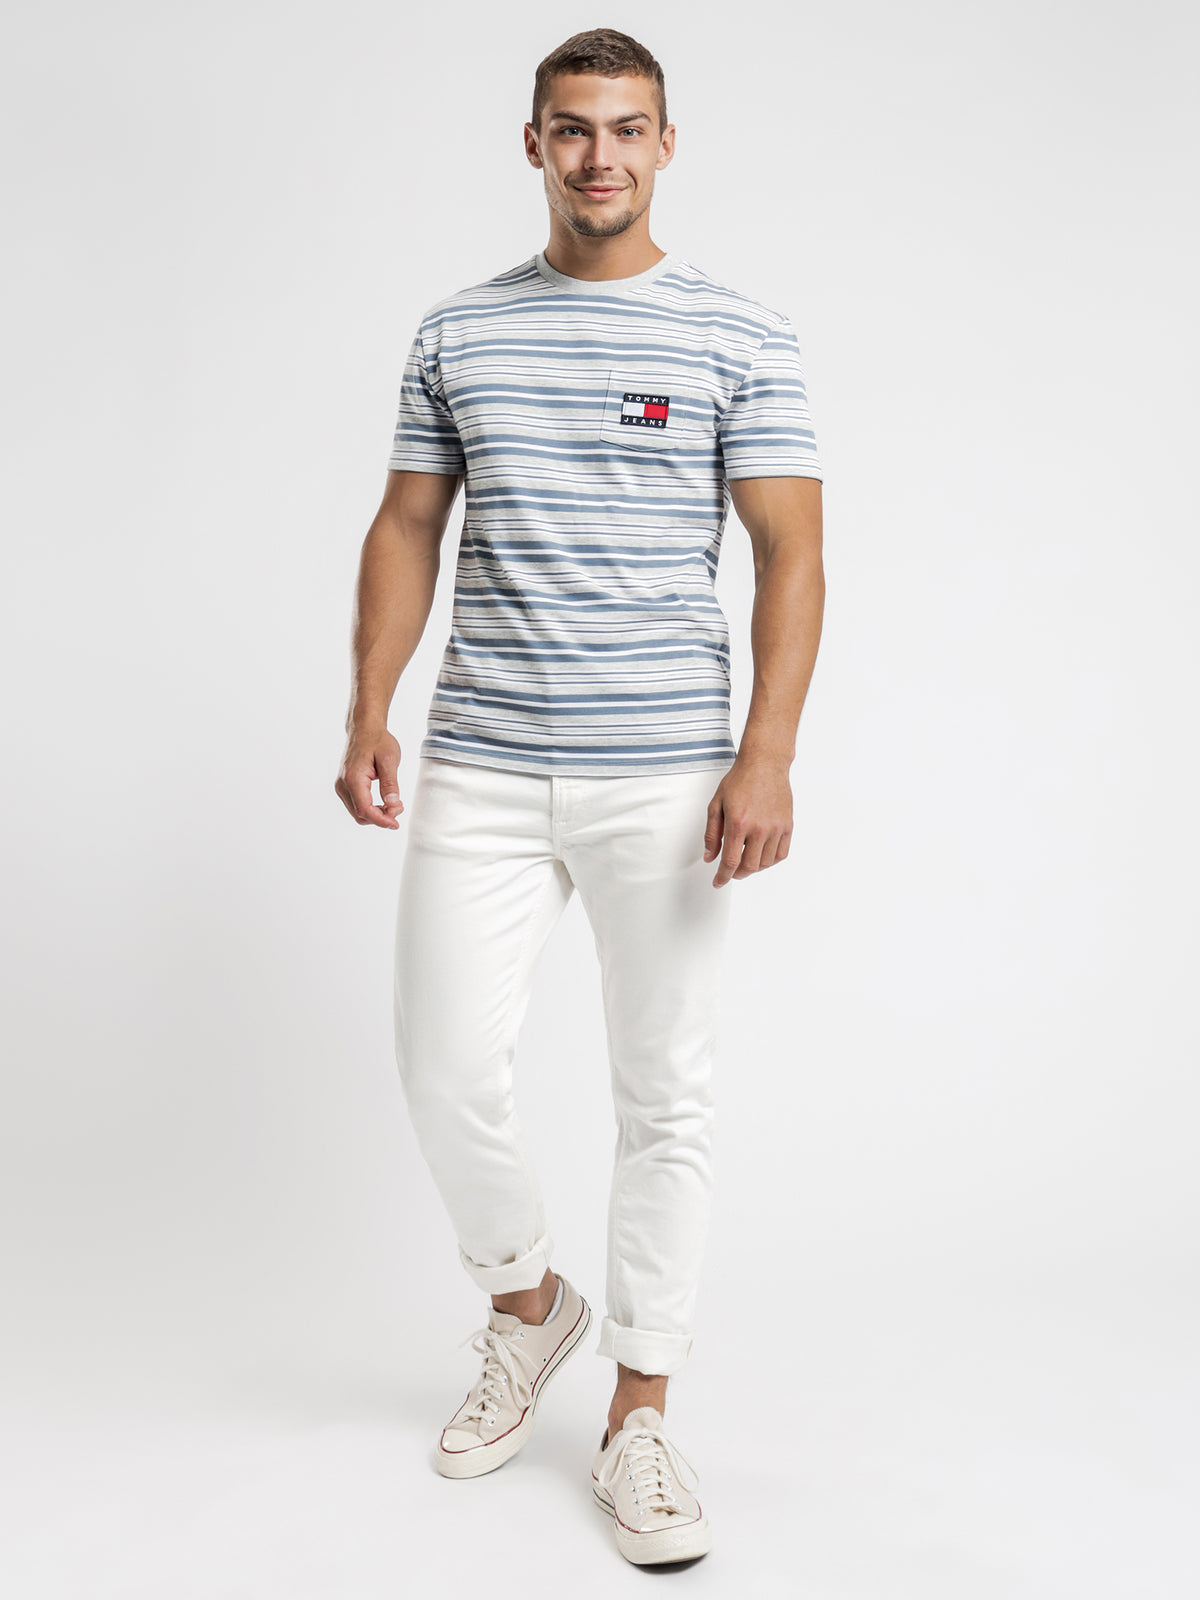 Stripe Pocket T-Shirt in Grey Heather Stripe